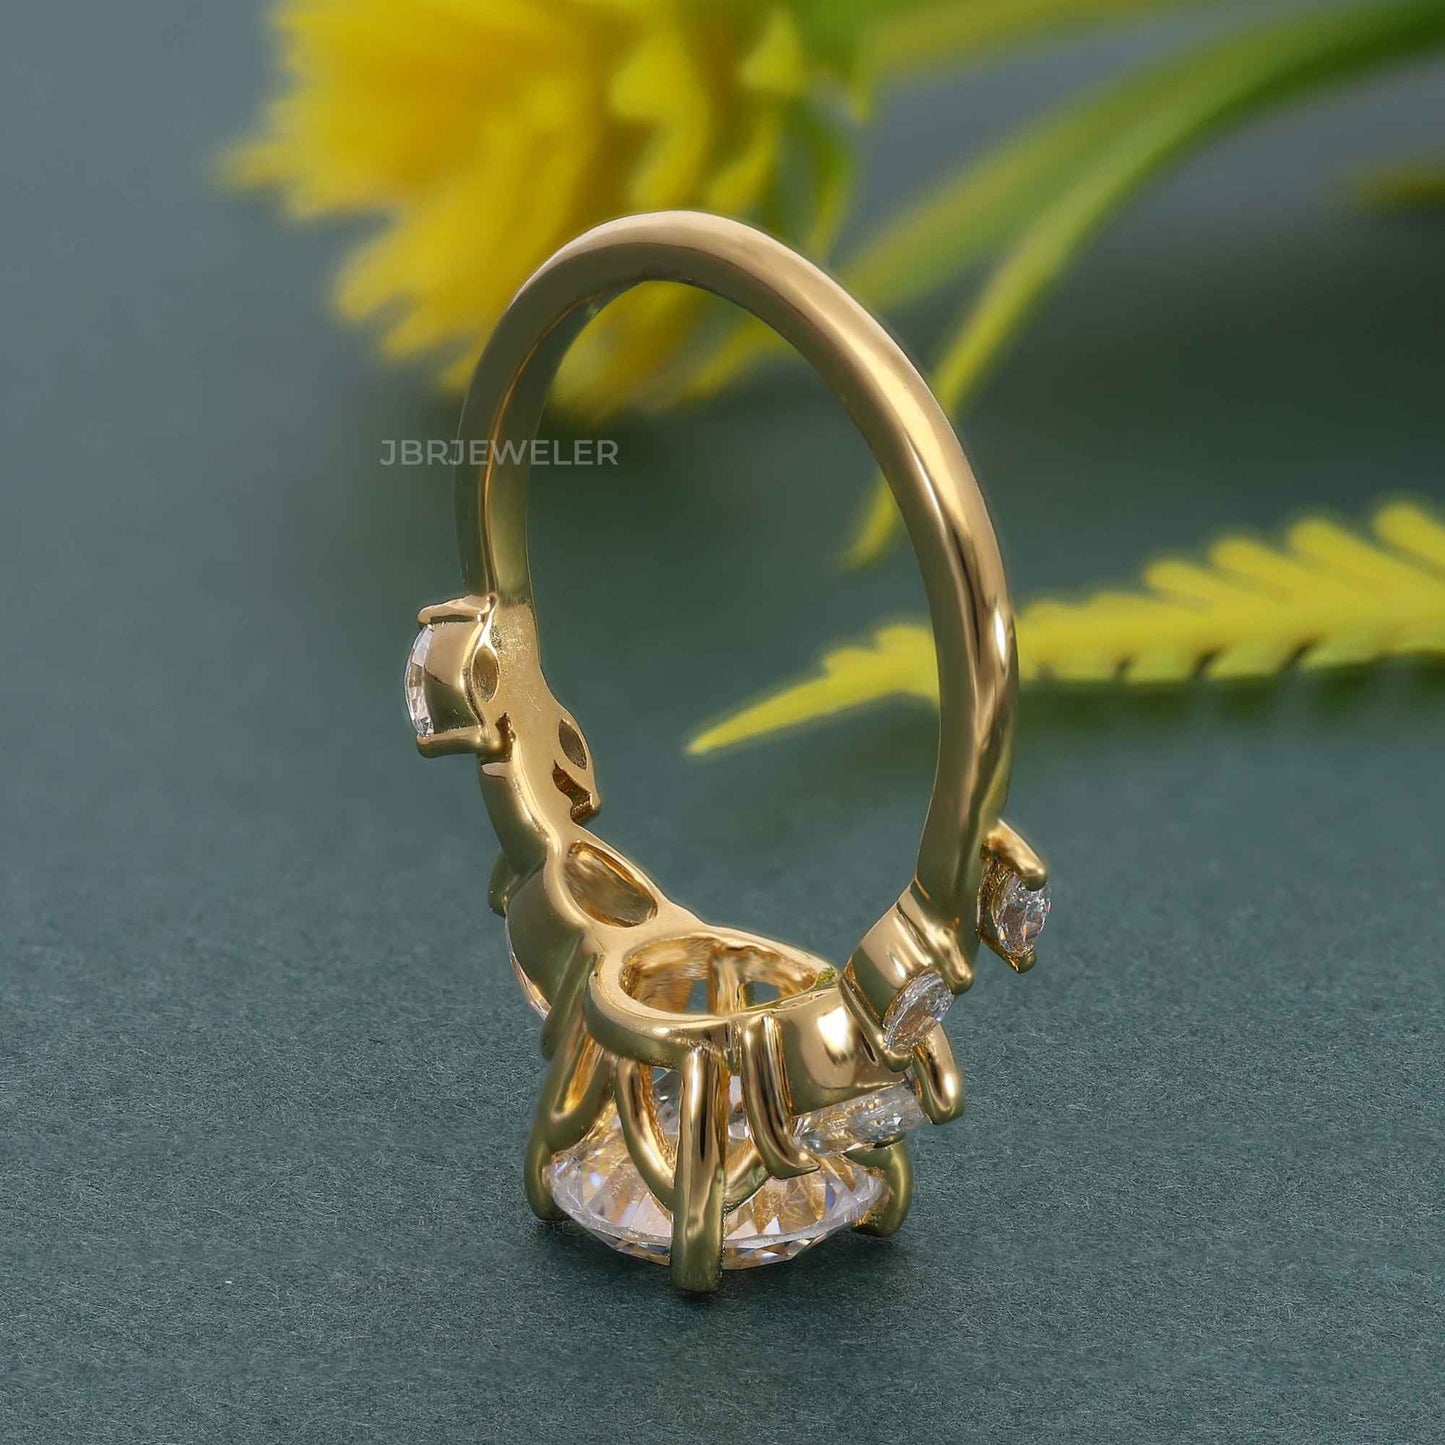 Floral Three Stone Round Cut Lab Grown Diamond Engagement Ring